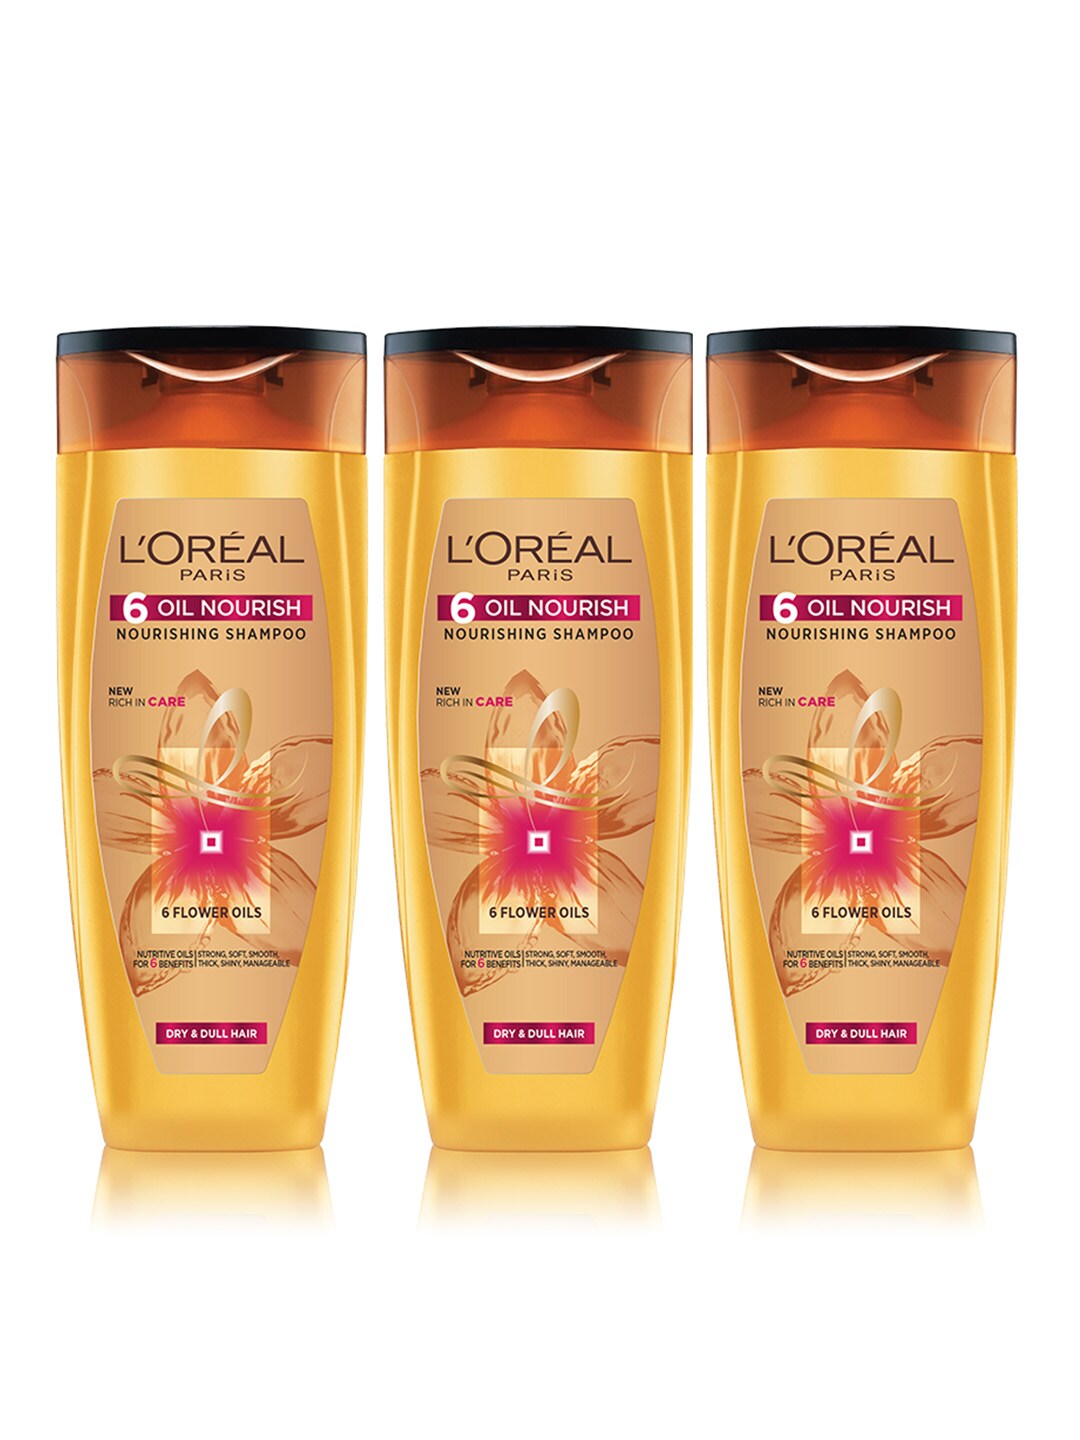 LOreal Paris Set of 3 6-Oil Nourish Shampoos - 192.5 ml each Price in India